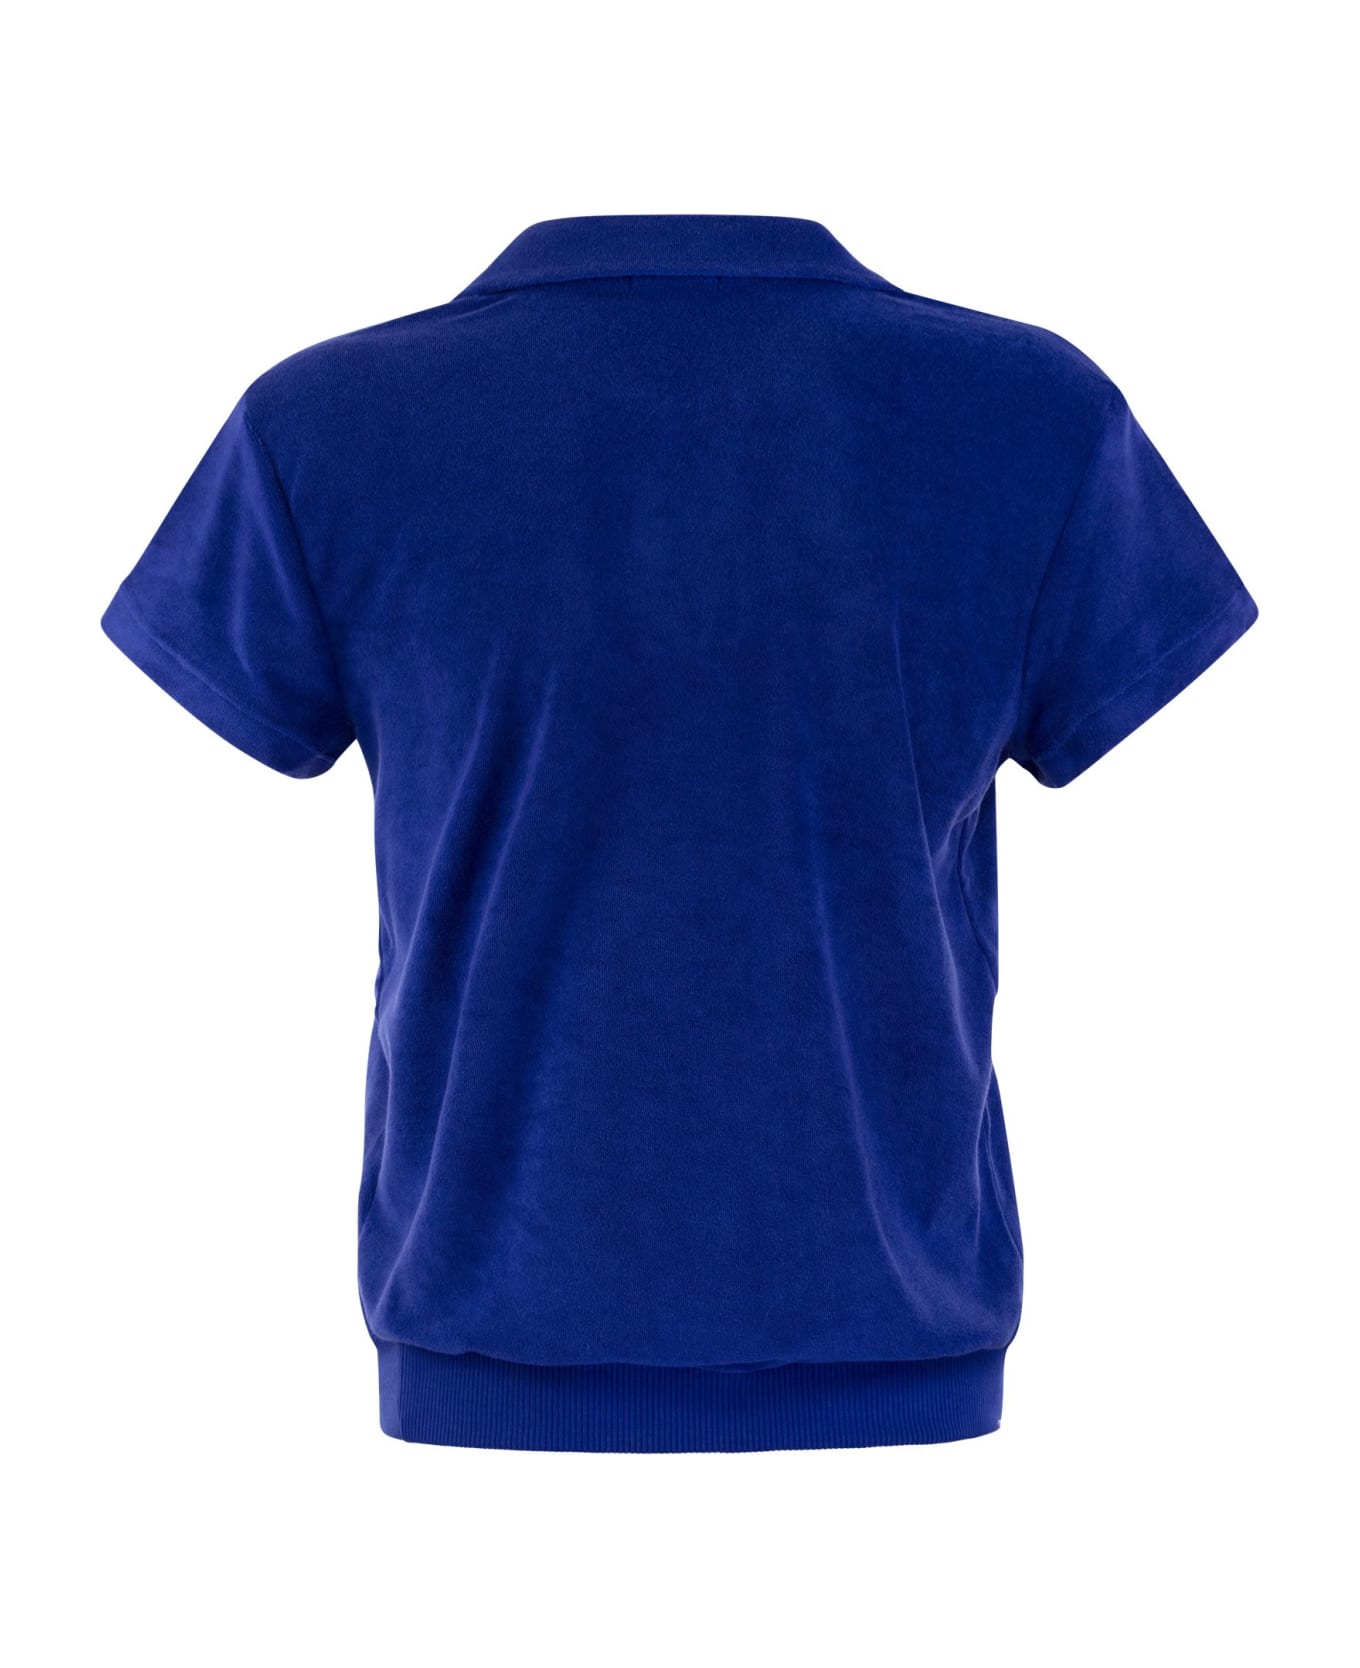 Polo Ralph Lauren Tight Terry Polo Shirt - Royal Blue Tシャツ